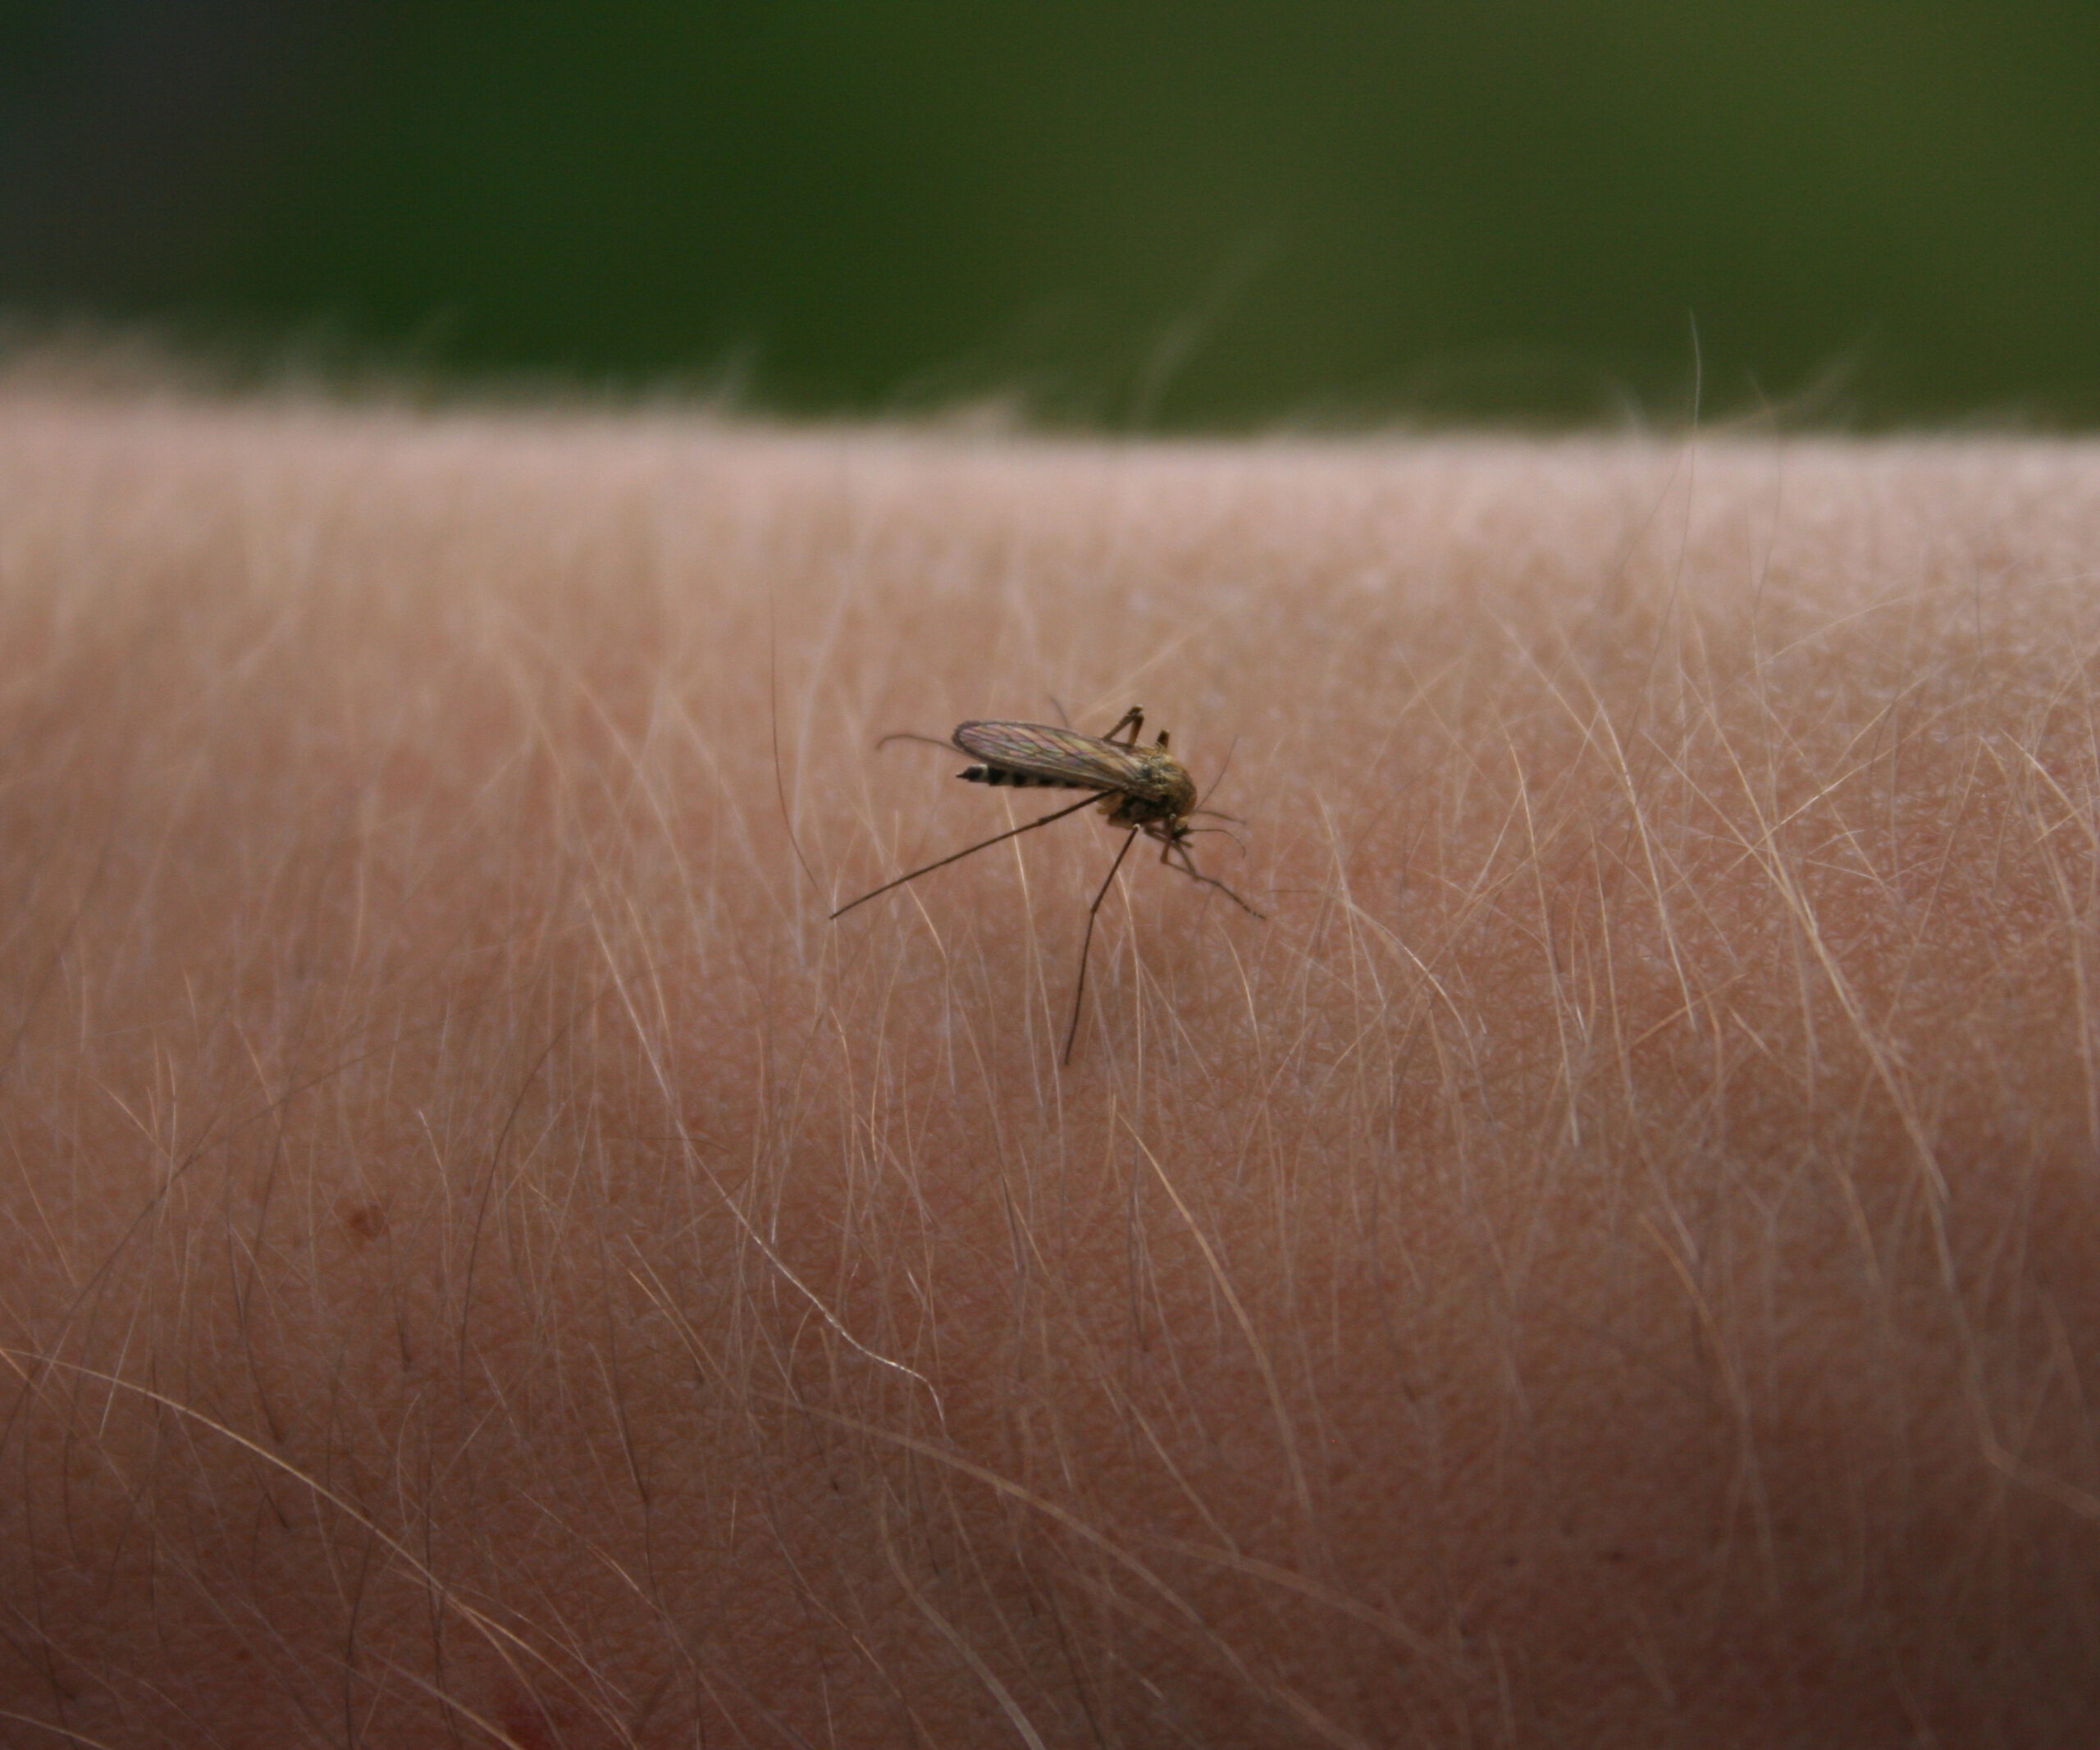 Zika virus warning for Bali 